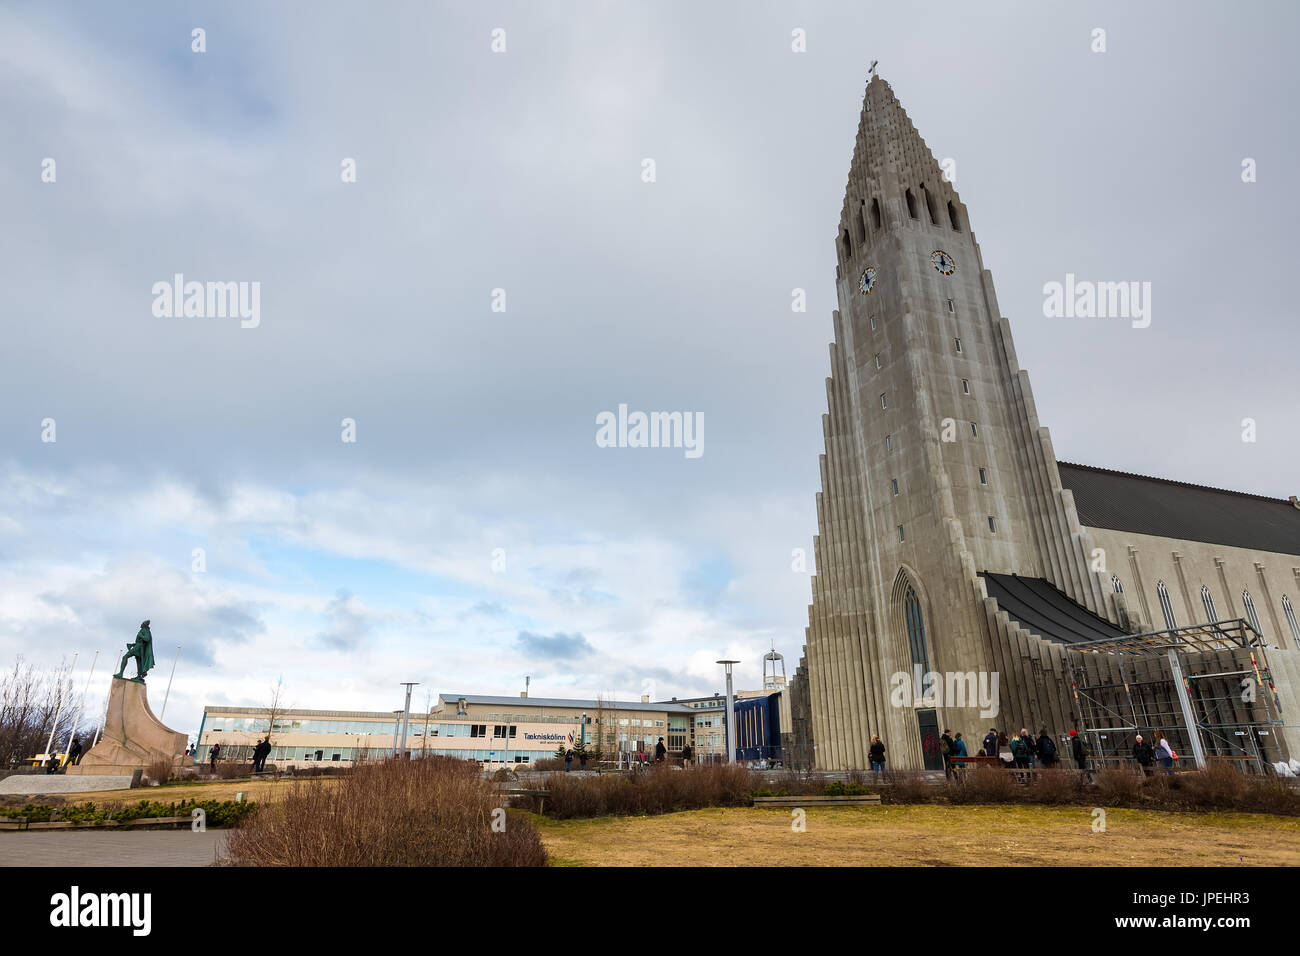 Reykjavik, Iceland - April 1, 2017: The famous Hallgrimskirkja Cathedral in city of Reykjavik in Iceland Stock Photo